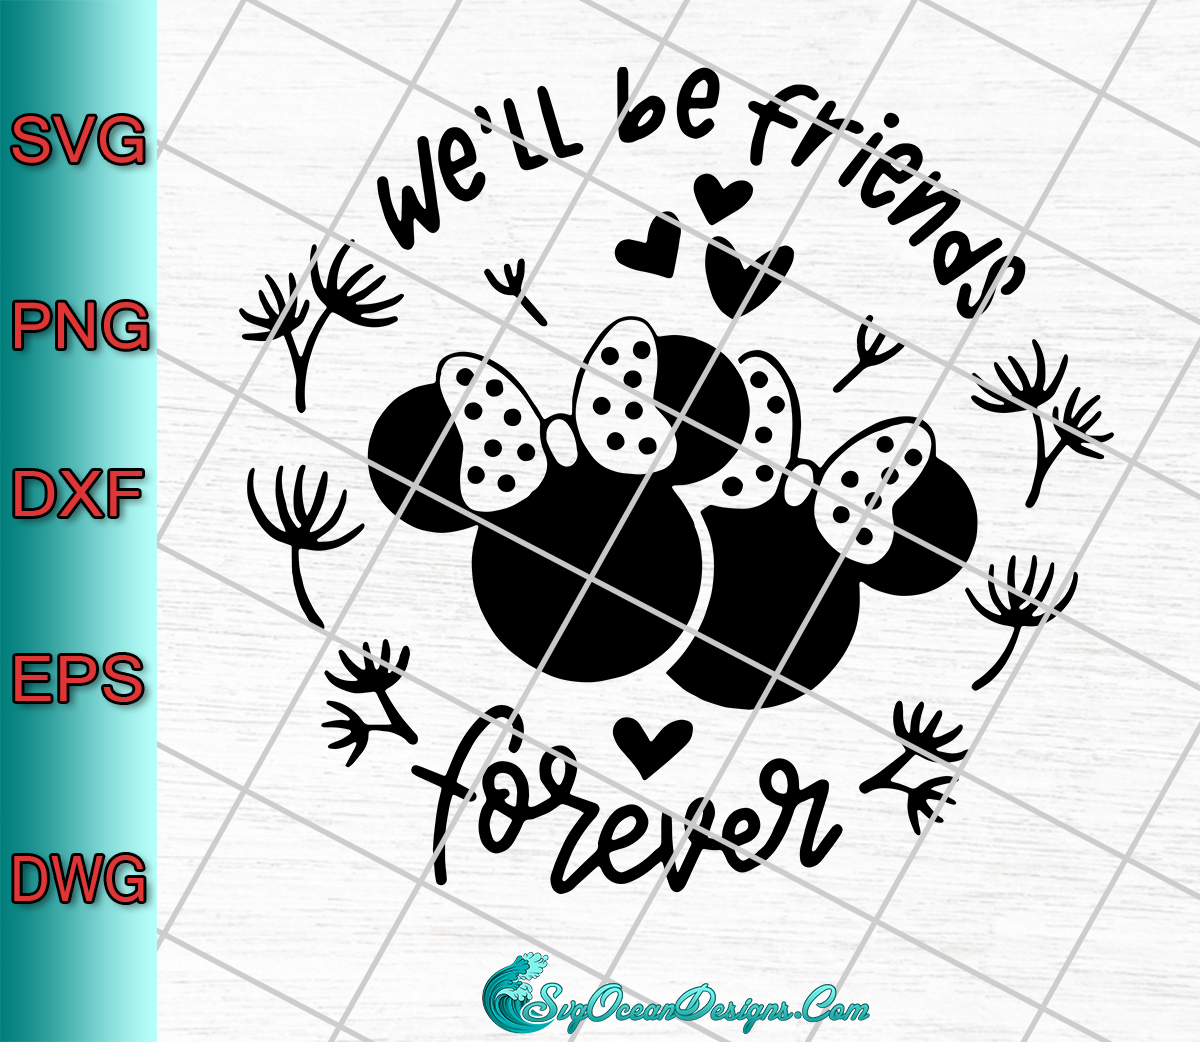 We'll Be Friends Forever Svg Png Dxf Eps , Disney Svg ...